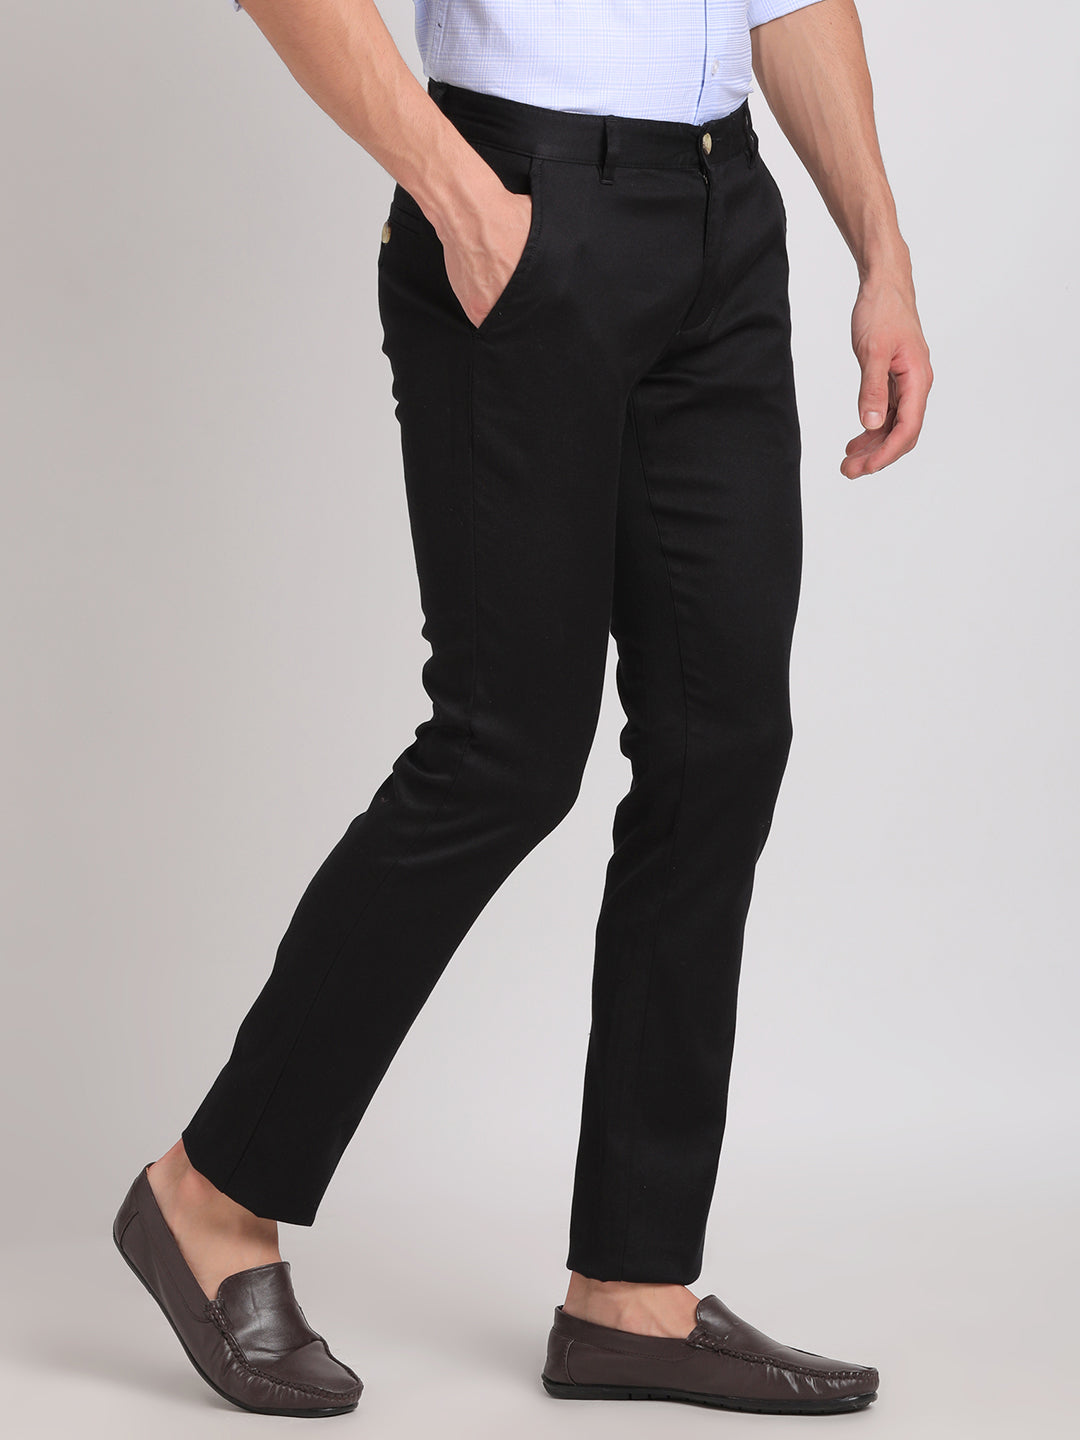 Men's Elastic Waist Trousers Formal Casual Business Office Dress Pants  Bottoms | eBay